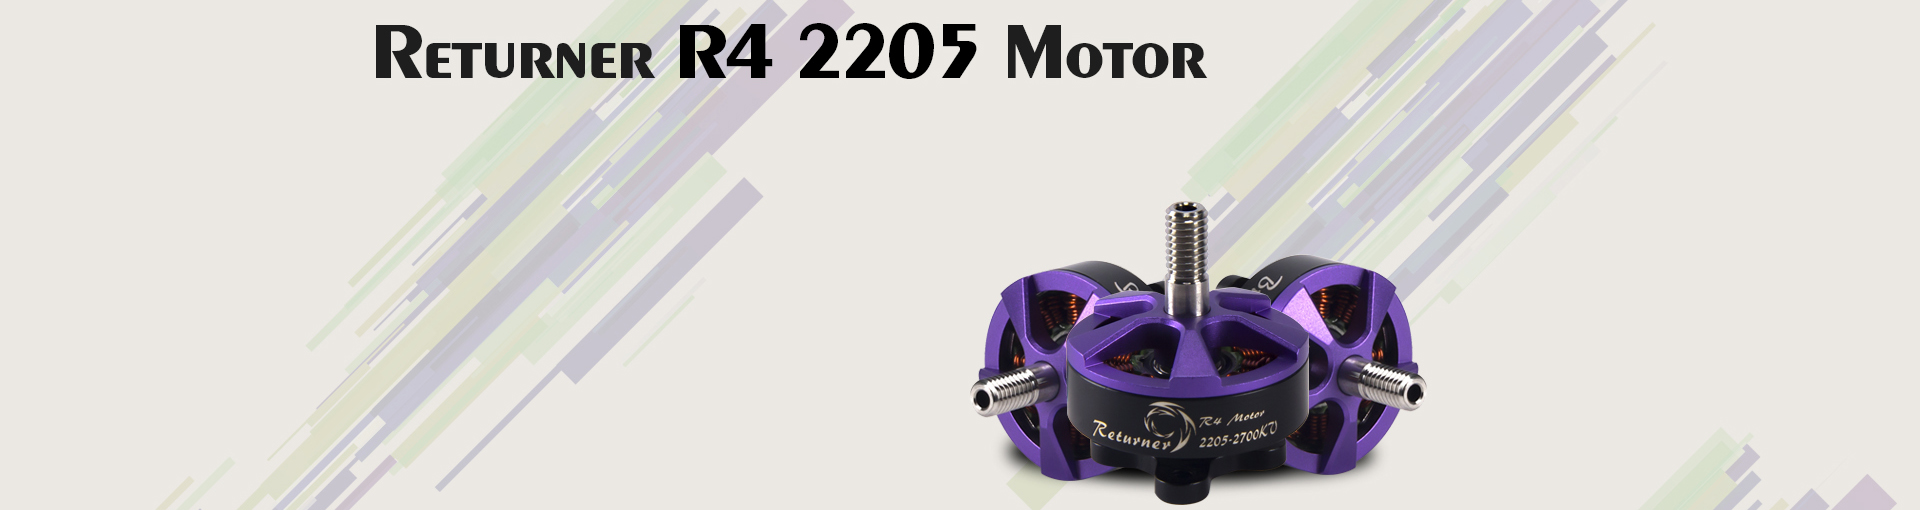 Returner R4 2205 Motor